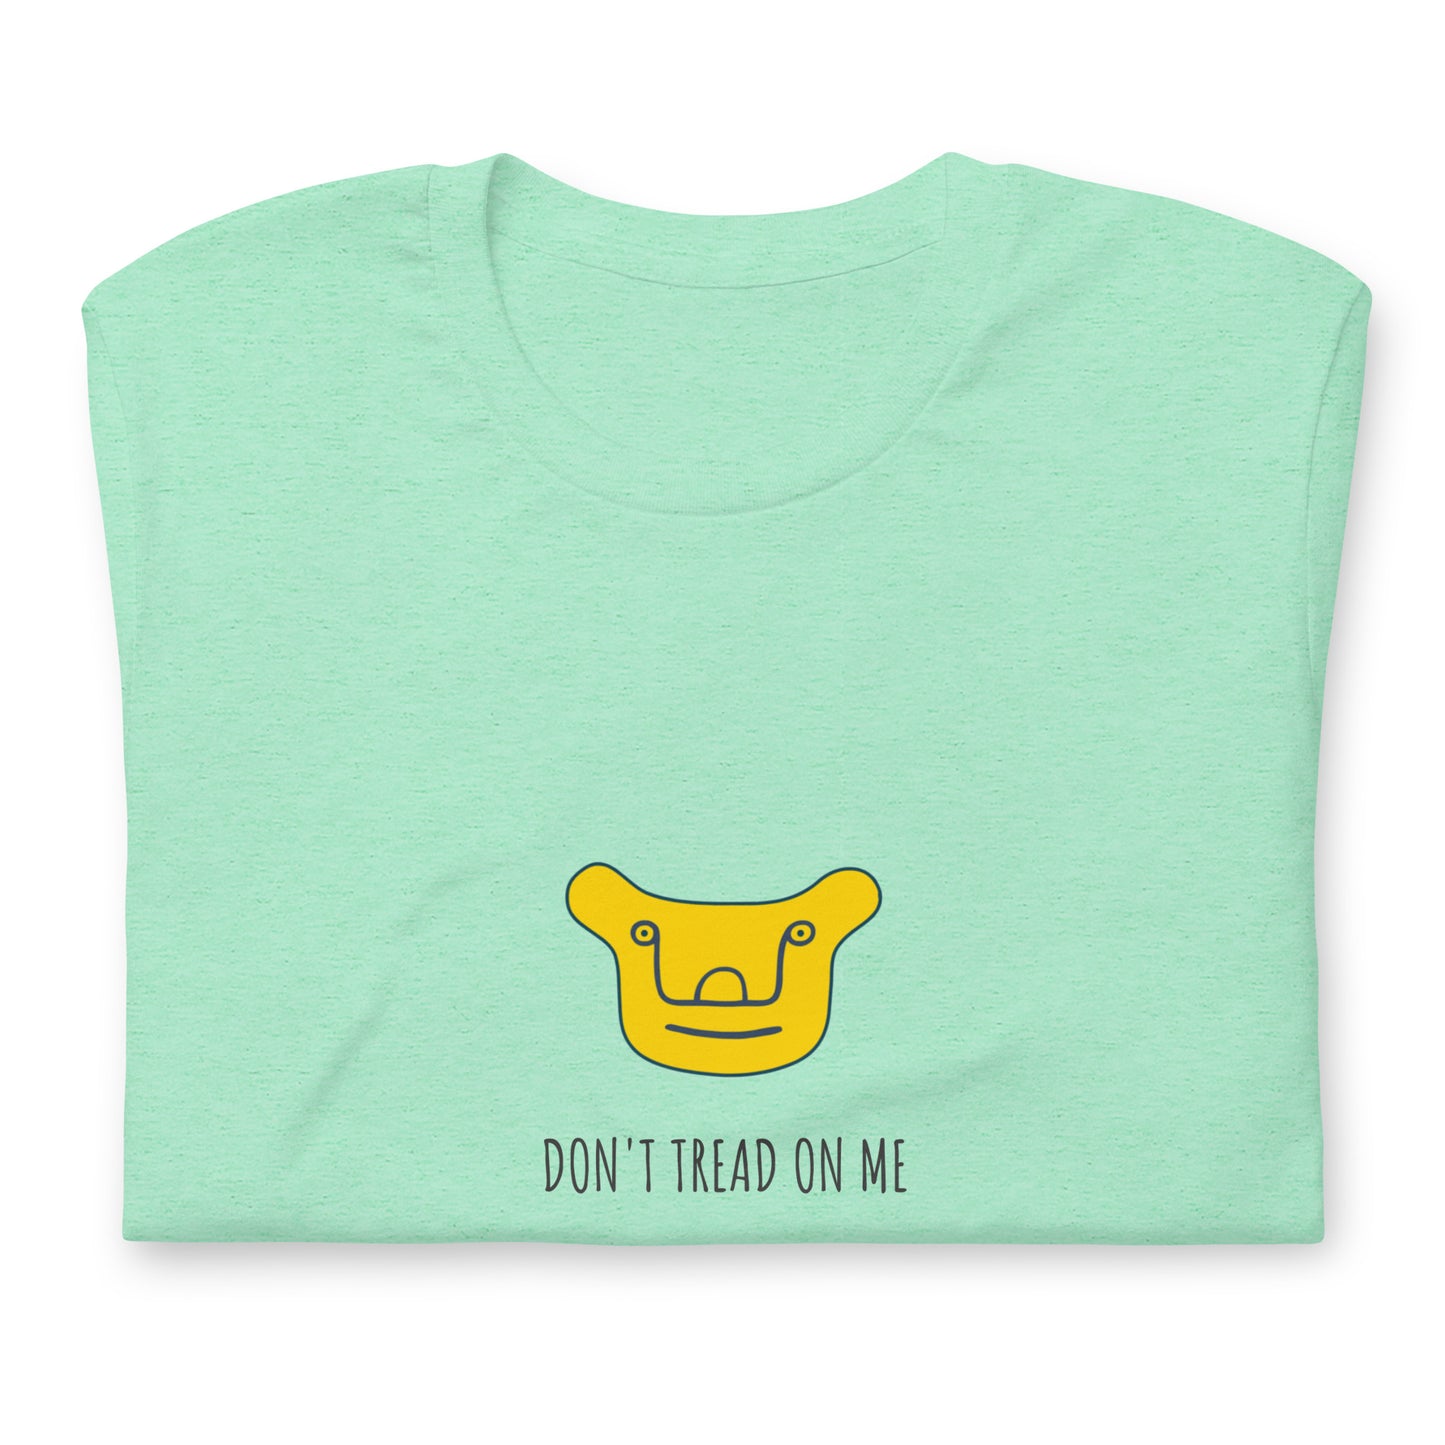 Don't tread on me! - Unisex t-shirt